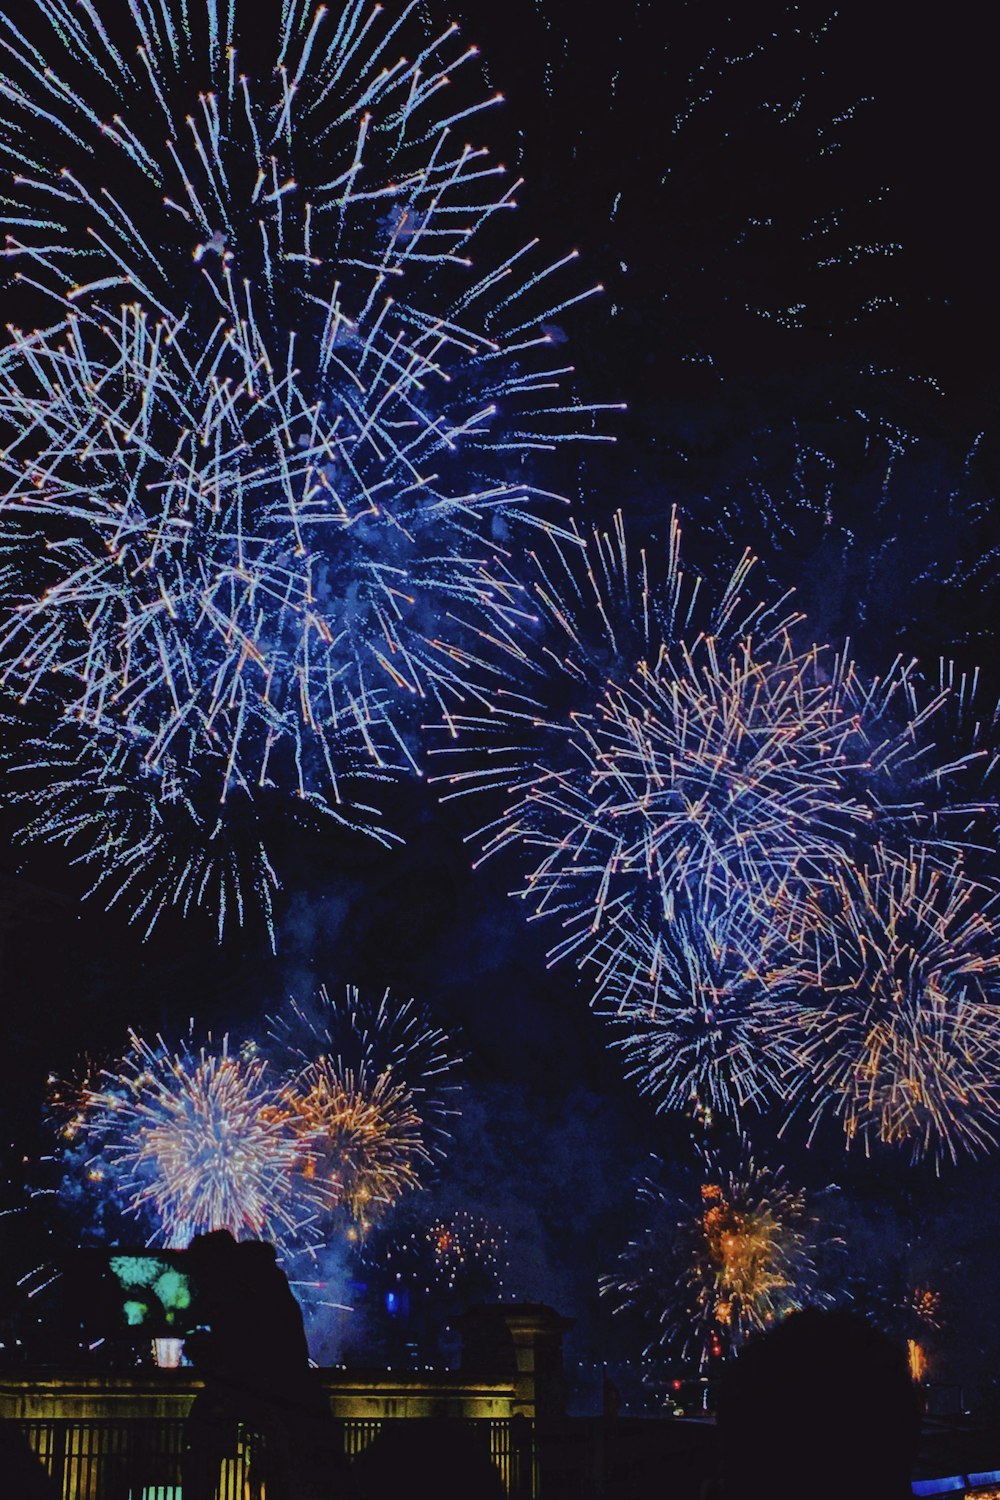 fireworks at night